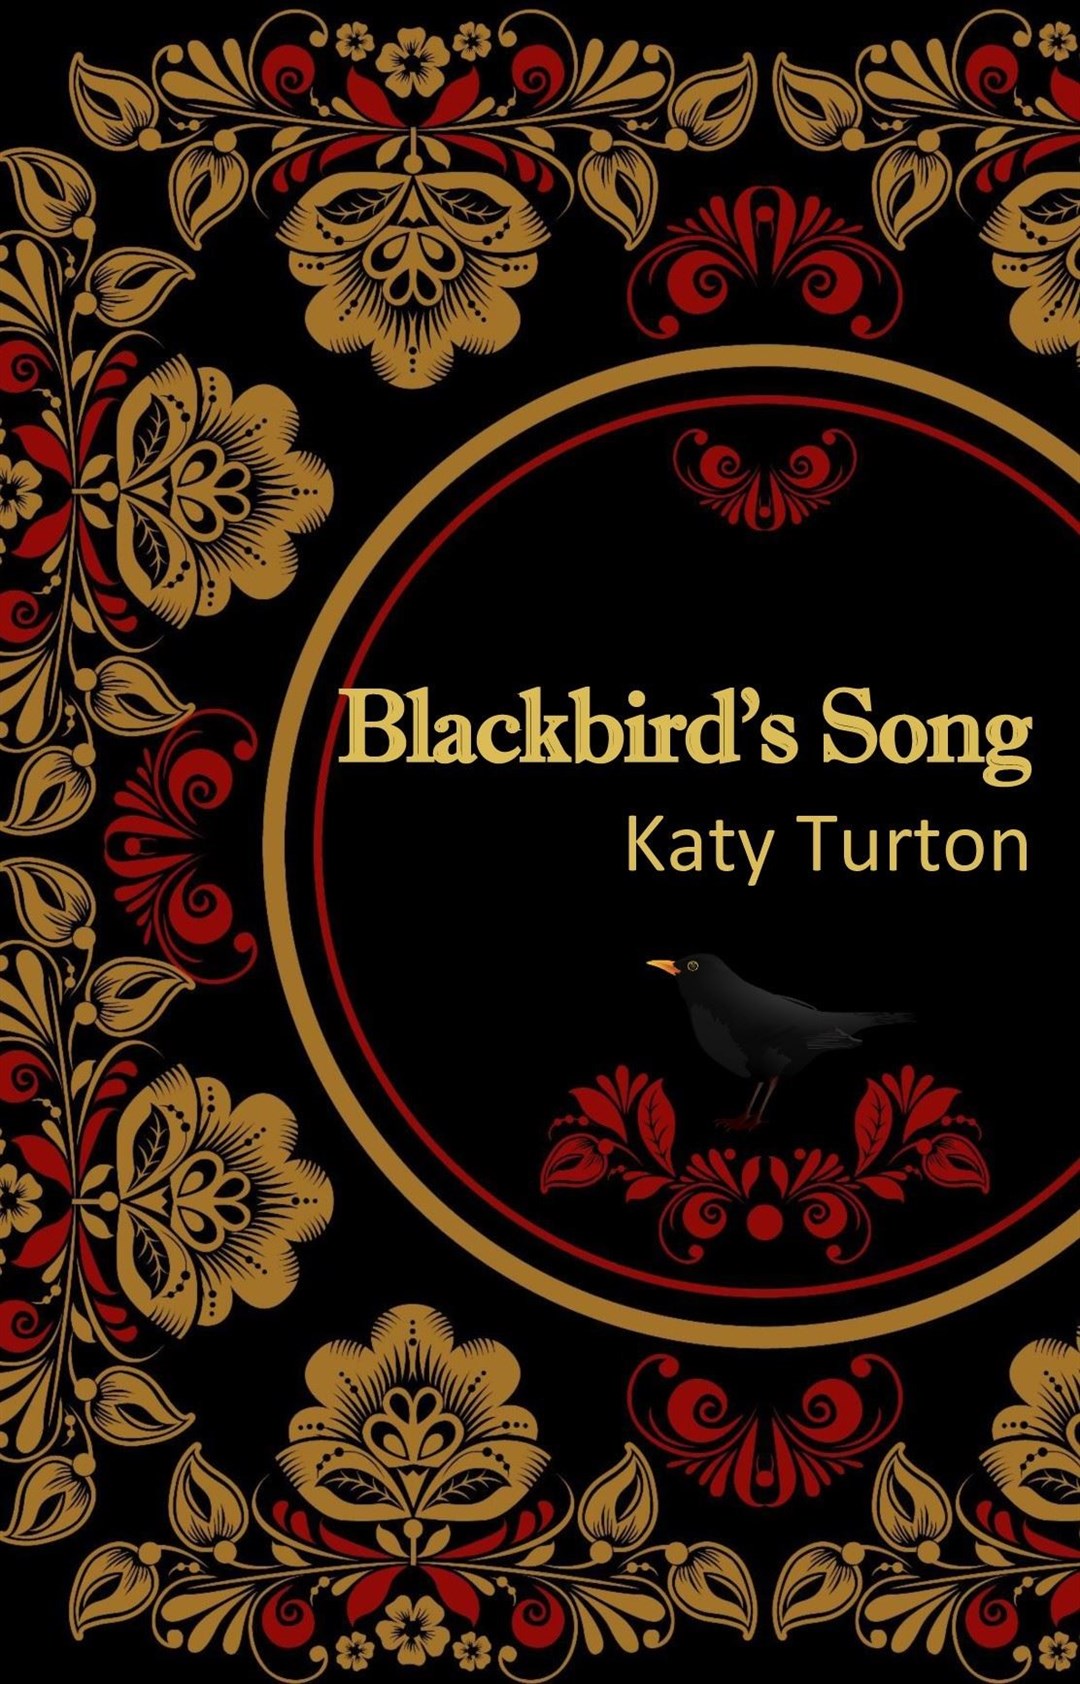 Novel Blackbird's Song is set in the Russian Revolution.